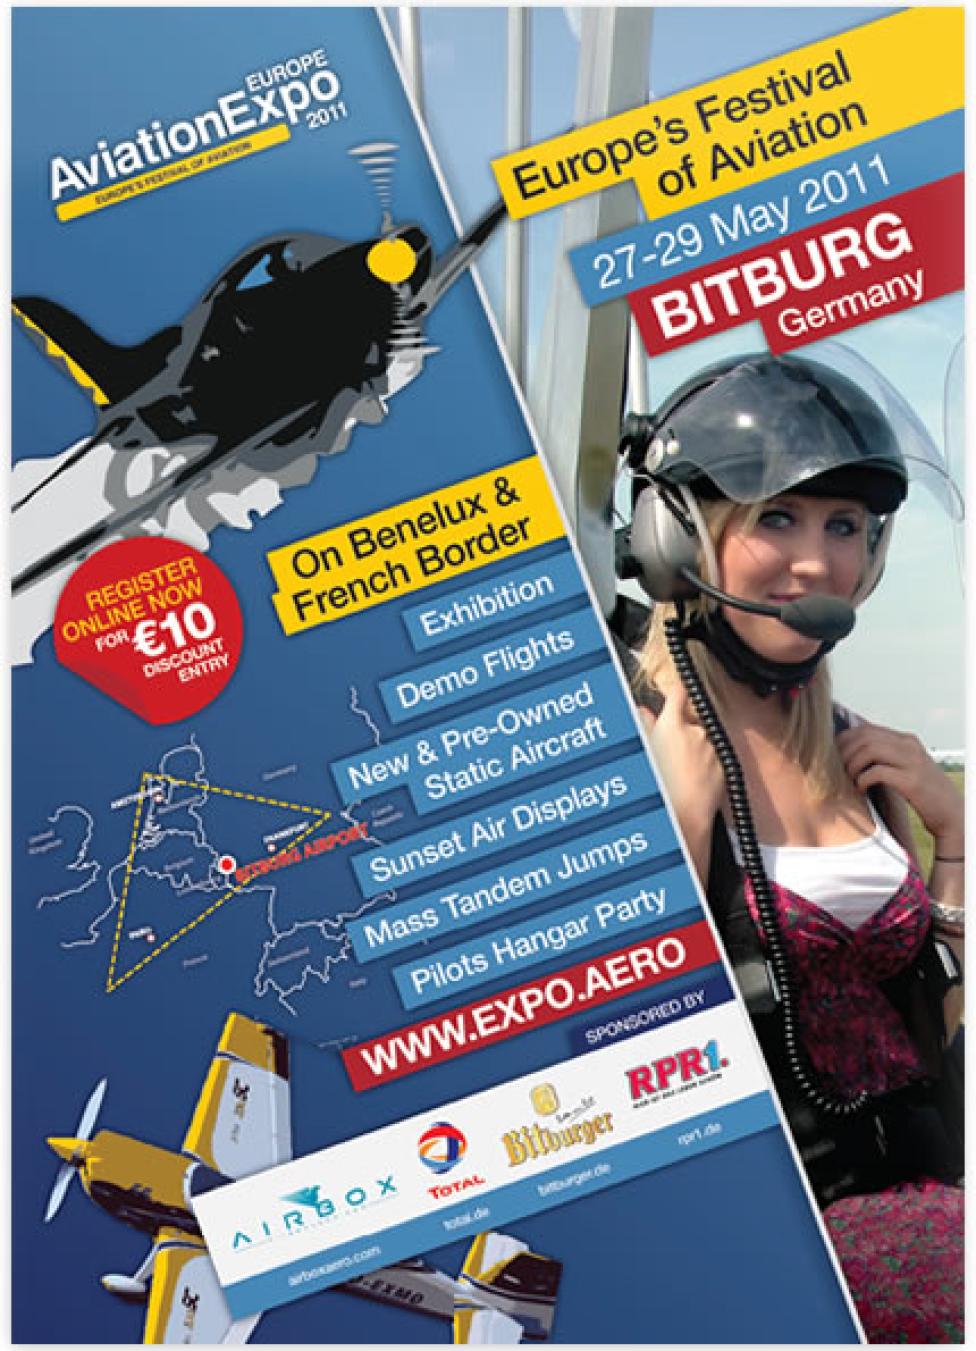 AviationExpo Europe 2011 (plakat)